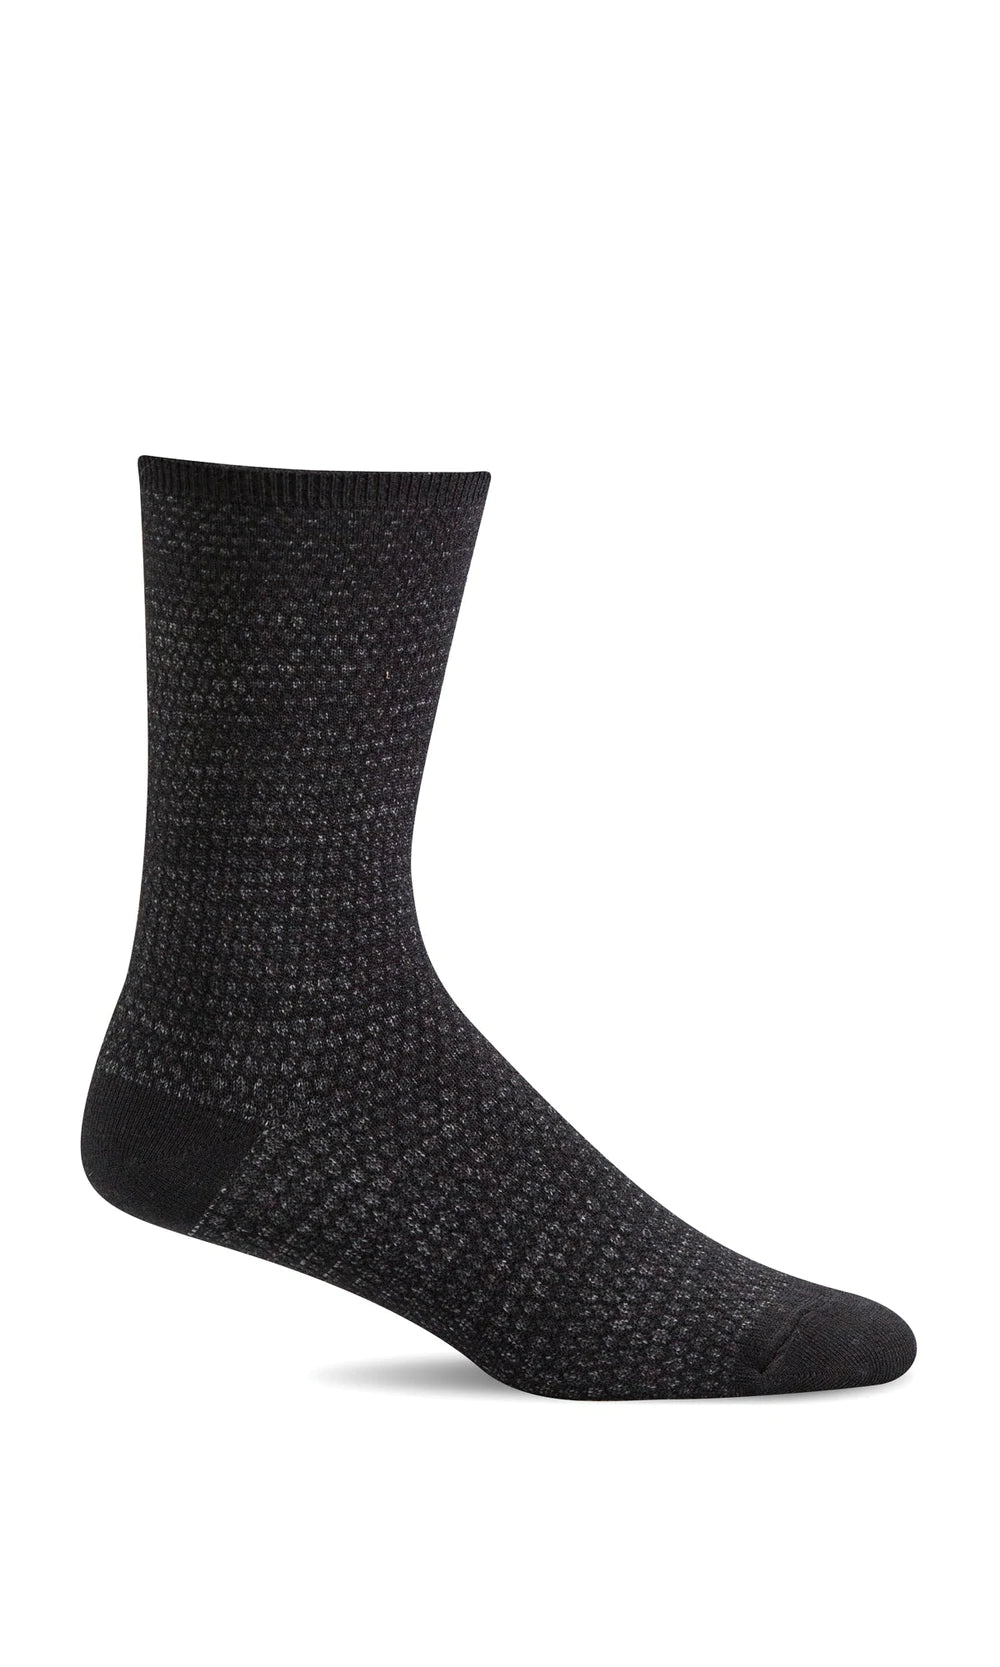 Wabi Sabi Black Casual Sock (Women's size scale)